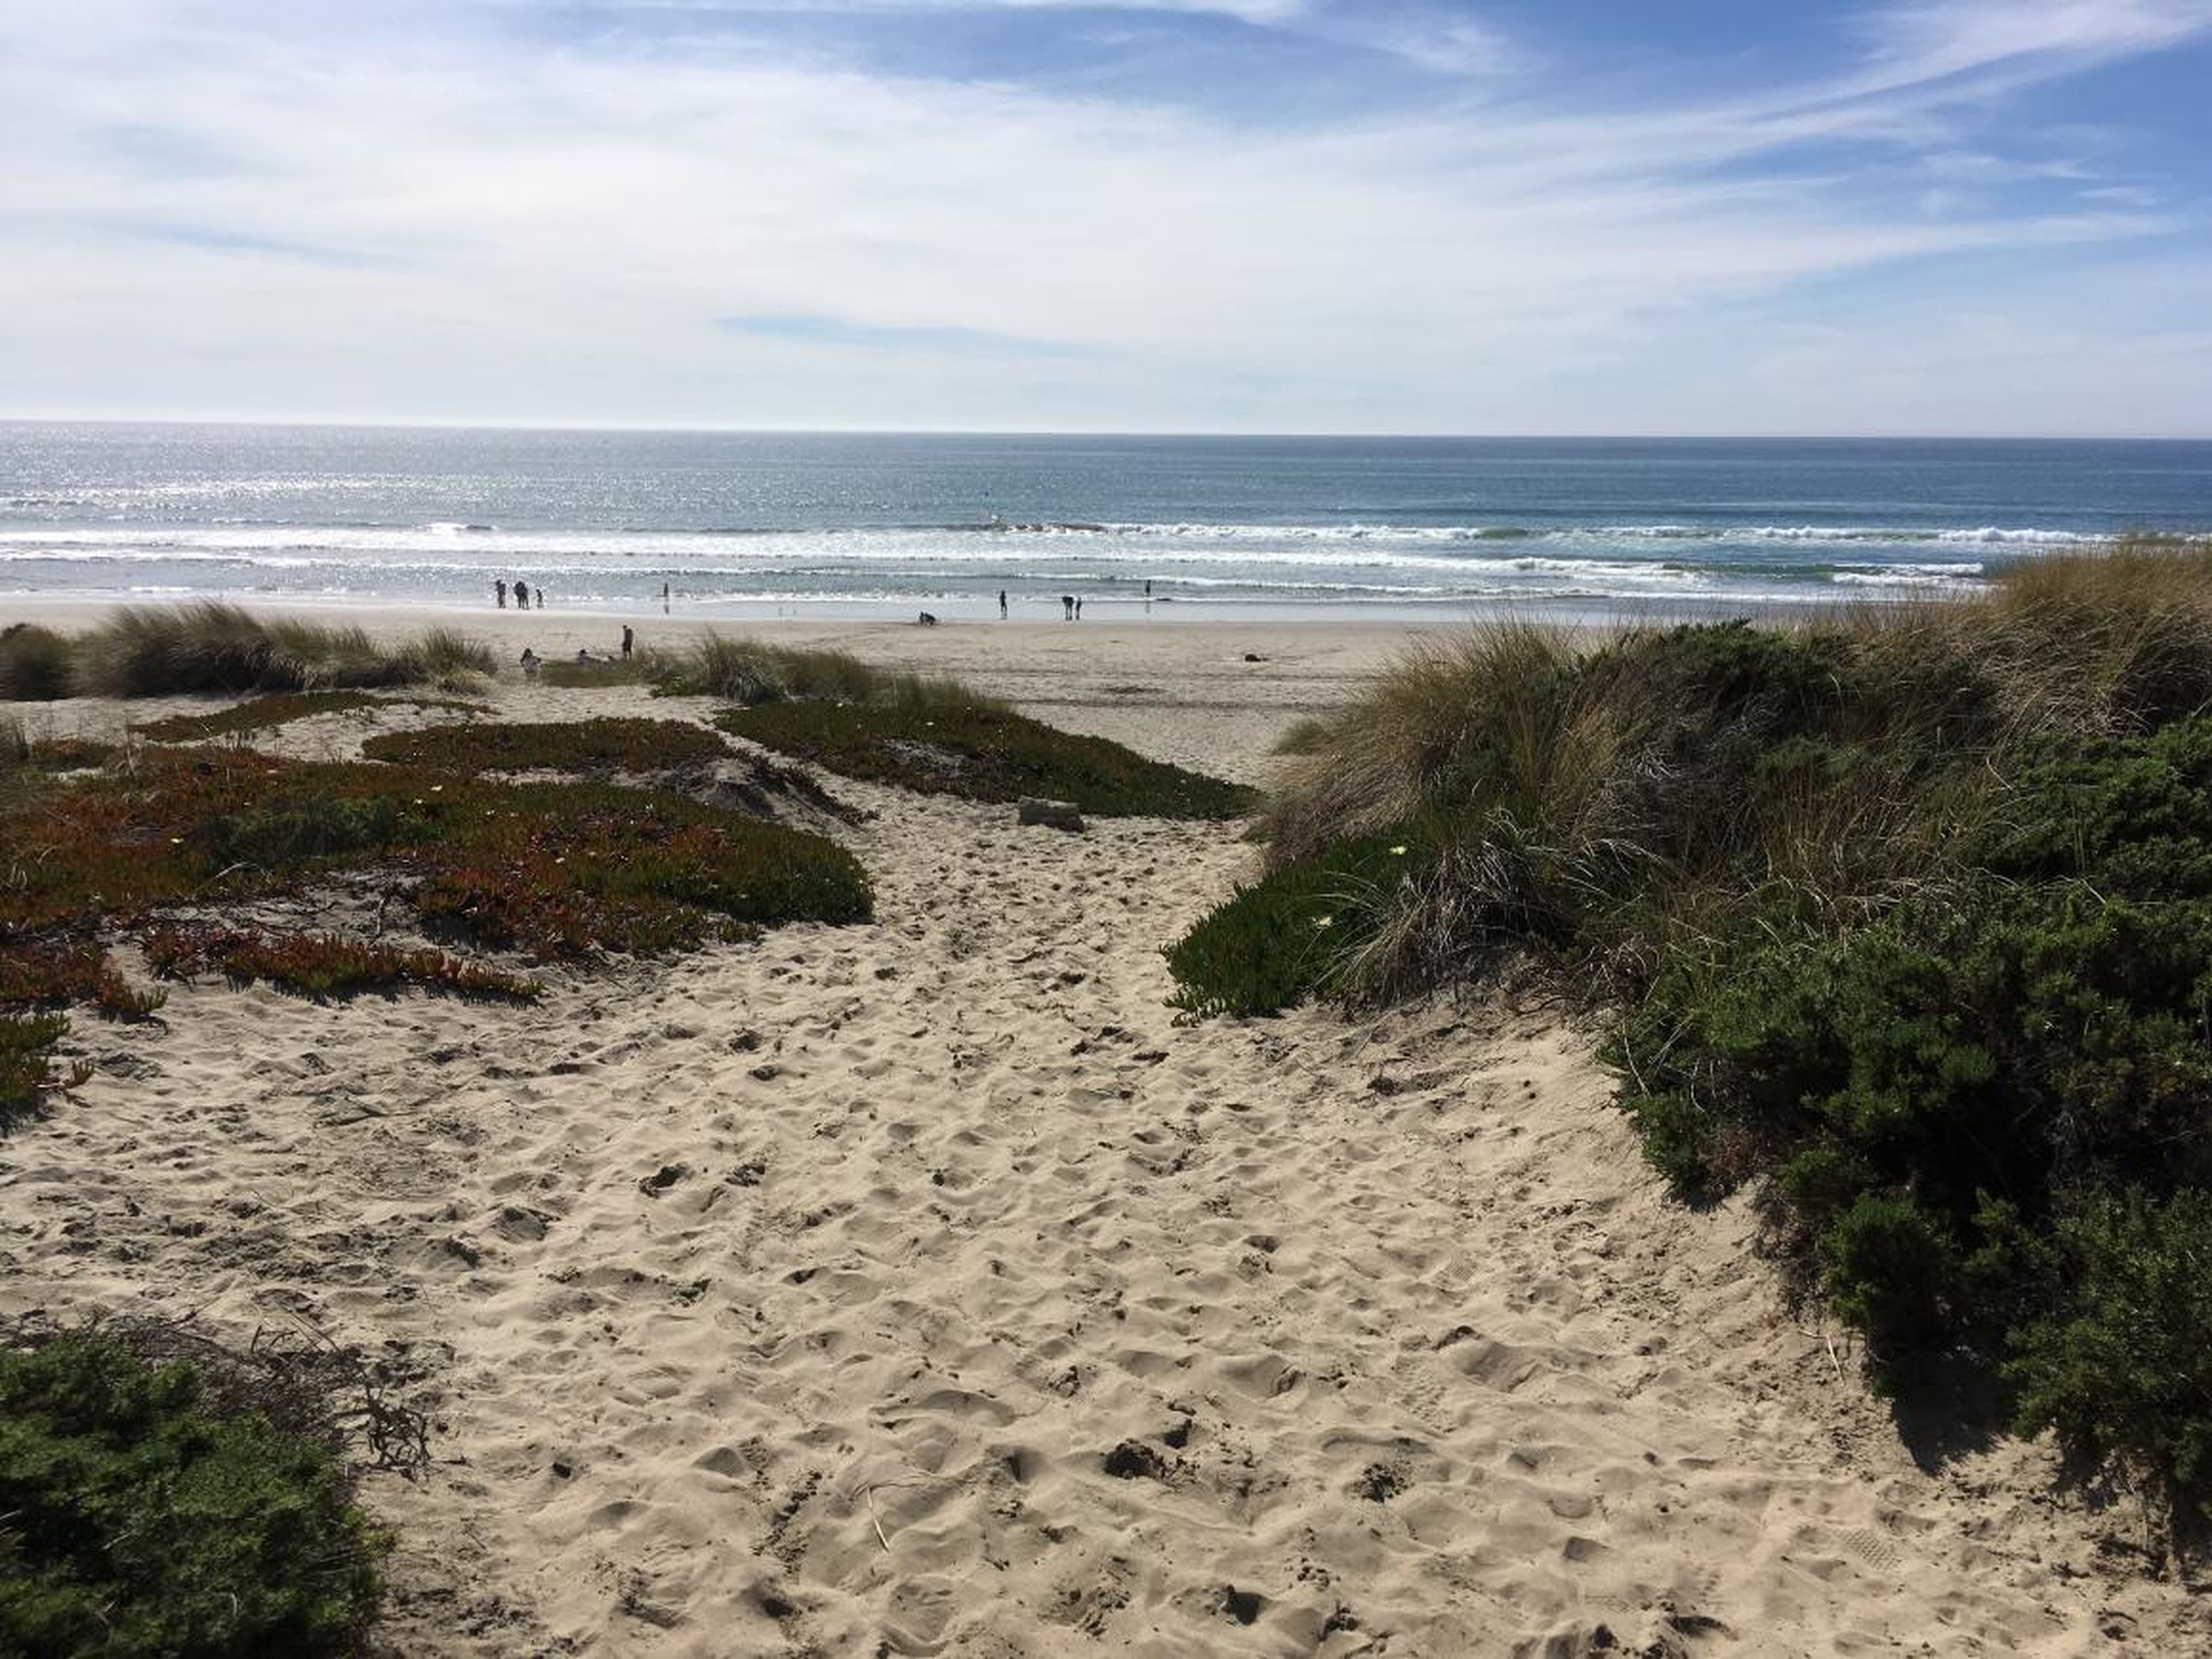 Shoreline view of Monterey Bay, CA from Moss Landing.